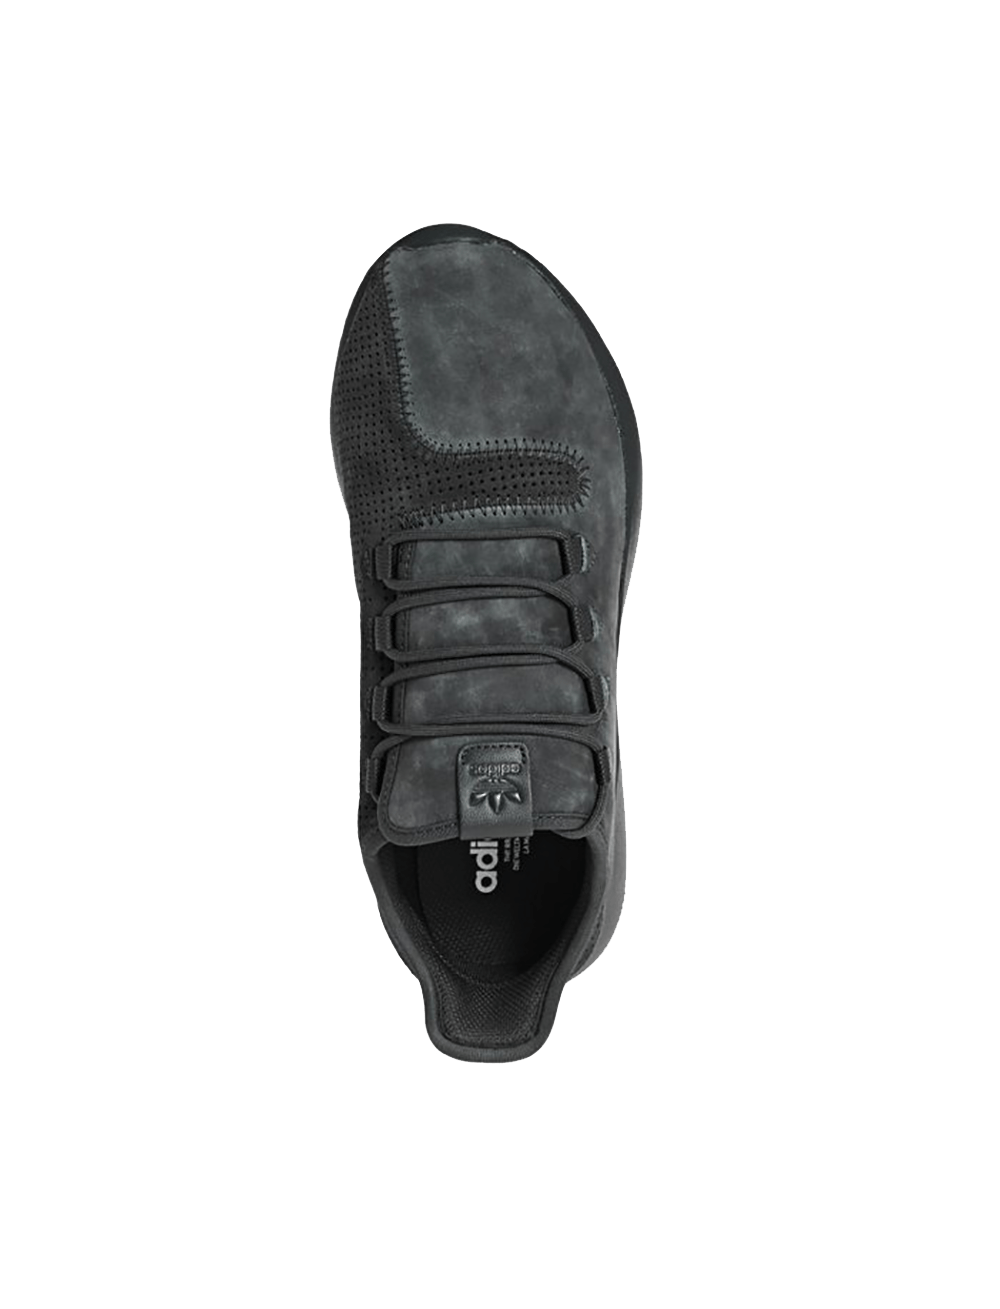 Adidas Originals Tubular Shadow Shoes